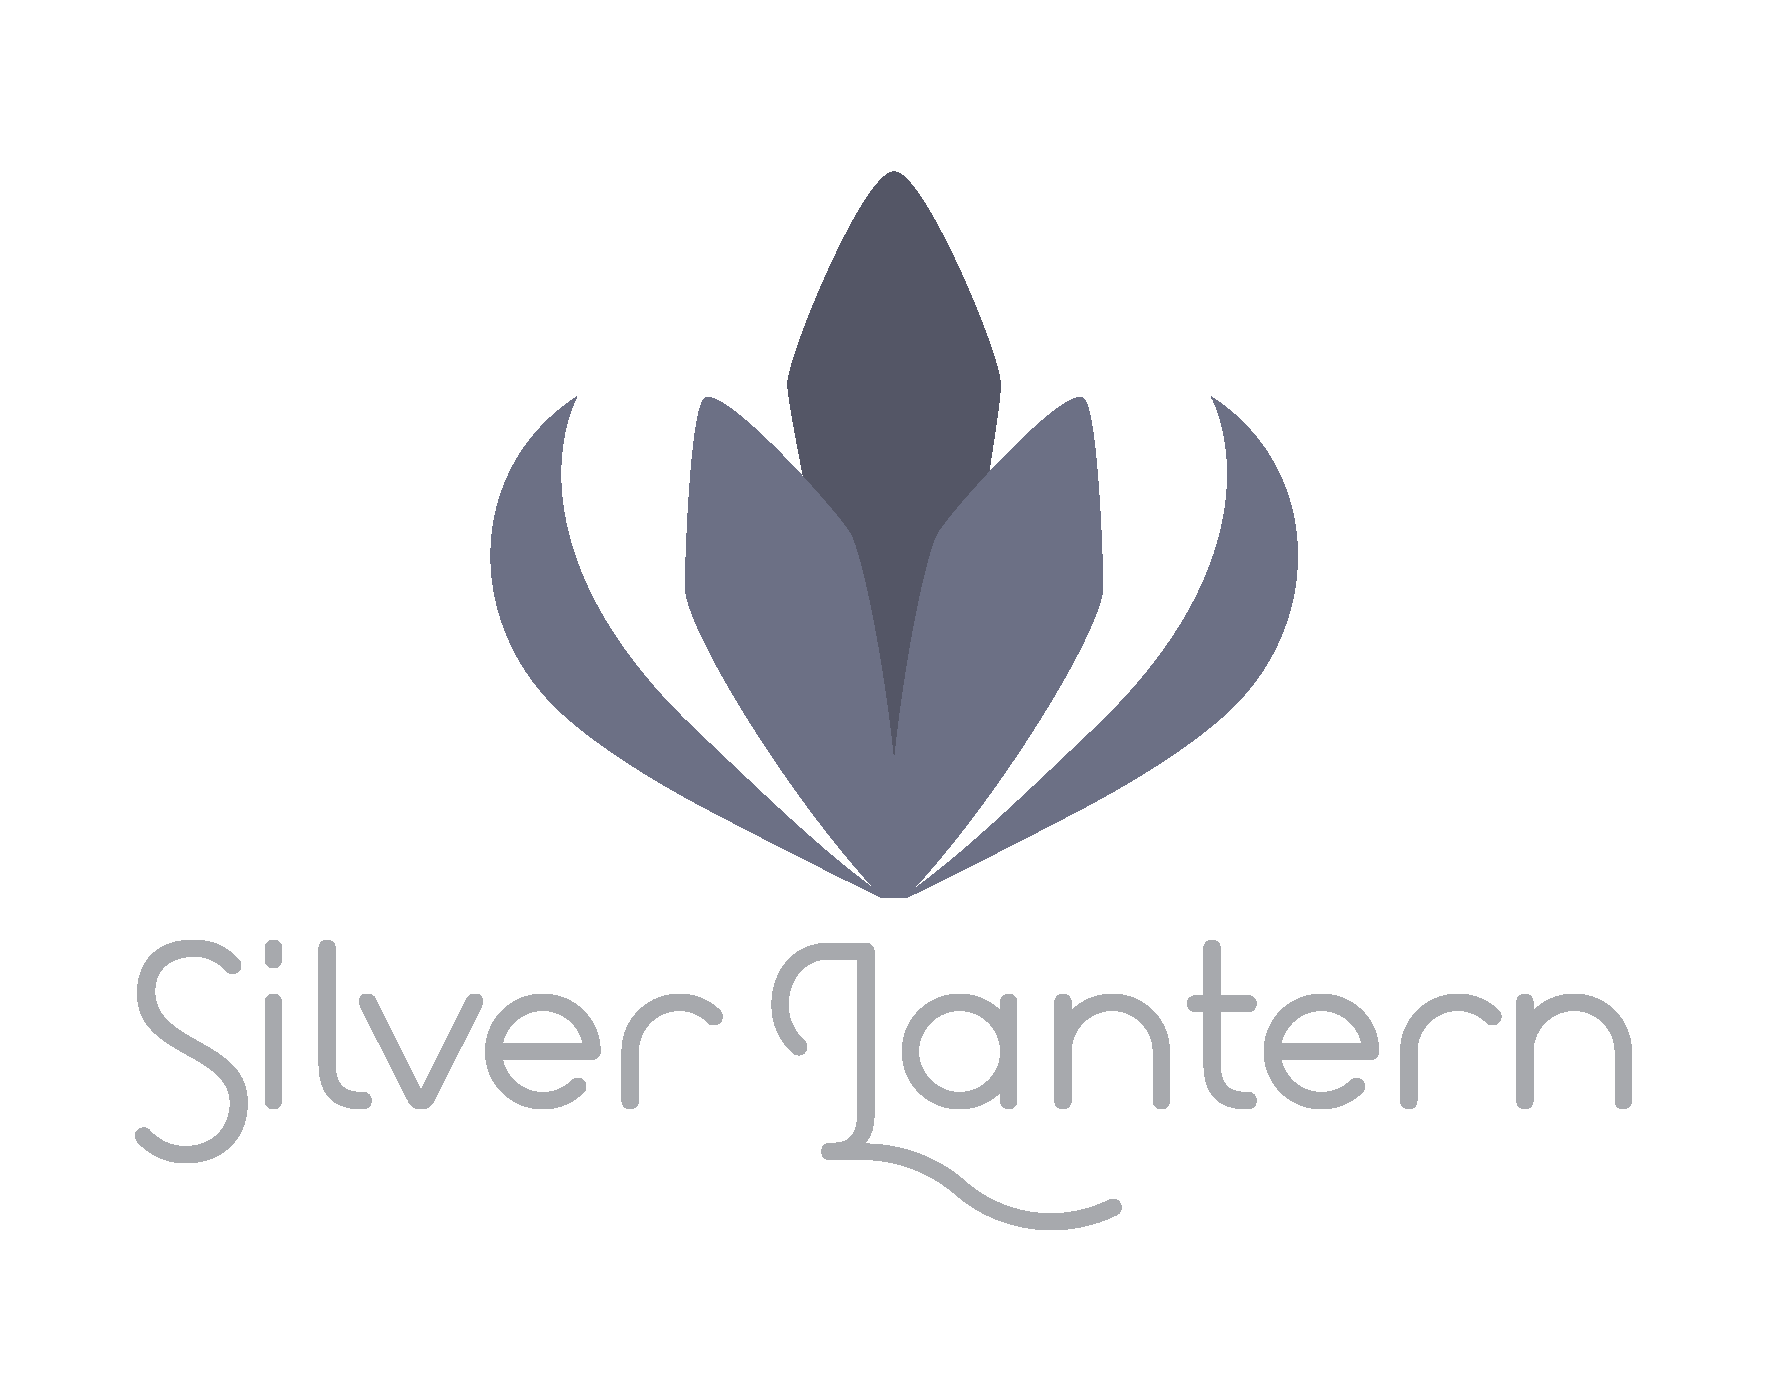 Silver Lantern Tea